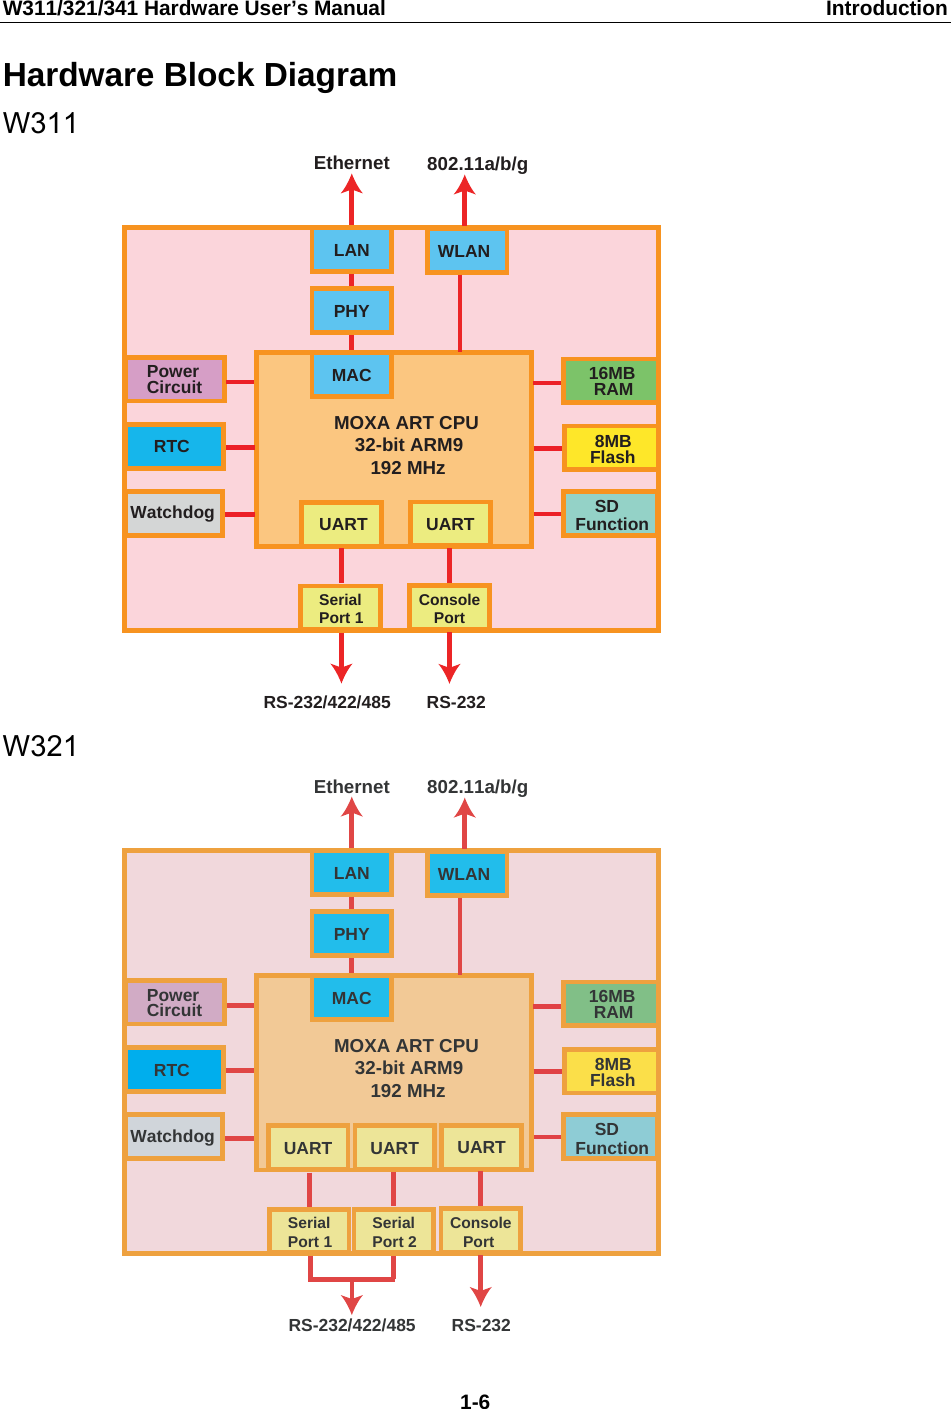 W311/321/341 Hardware User’s Manual  Introduction Hardware Block Diagram W311 UARTMOXA ART CPU    32-bit ARM9       192 MHz16MB RAM 8MBFlashPowerCircuitRTCWatchdogSerialPort 1LANMACPHYEthernetWLAN802.11a/b/g    SDFunctionUARTConsole   Port RS-232/422/485 RS-232 W321 UARTMOXA ART CPU    32-bit ARM9       192 MHz16MB RAM 8MBFlashPowerCircuitRTCWatchdogSerialPort 1LANMACPHYEthernetUARTSerialPort 2WLAN802.11a/b/g    SDFunctionUARTConsole   Port RS-232/422/485 RS-232  1-6